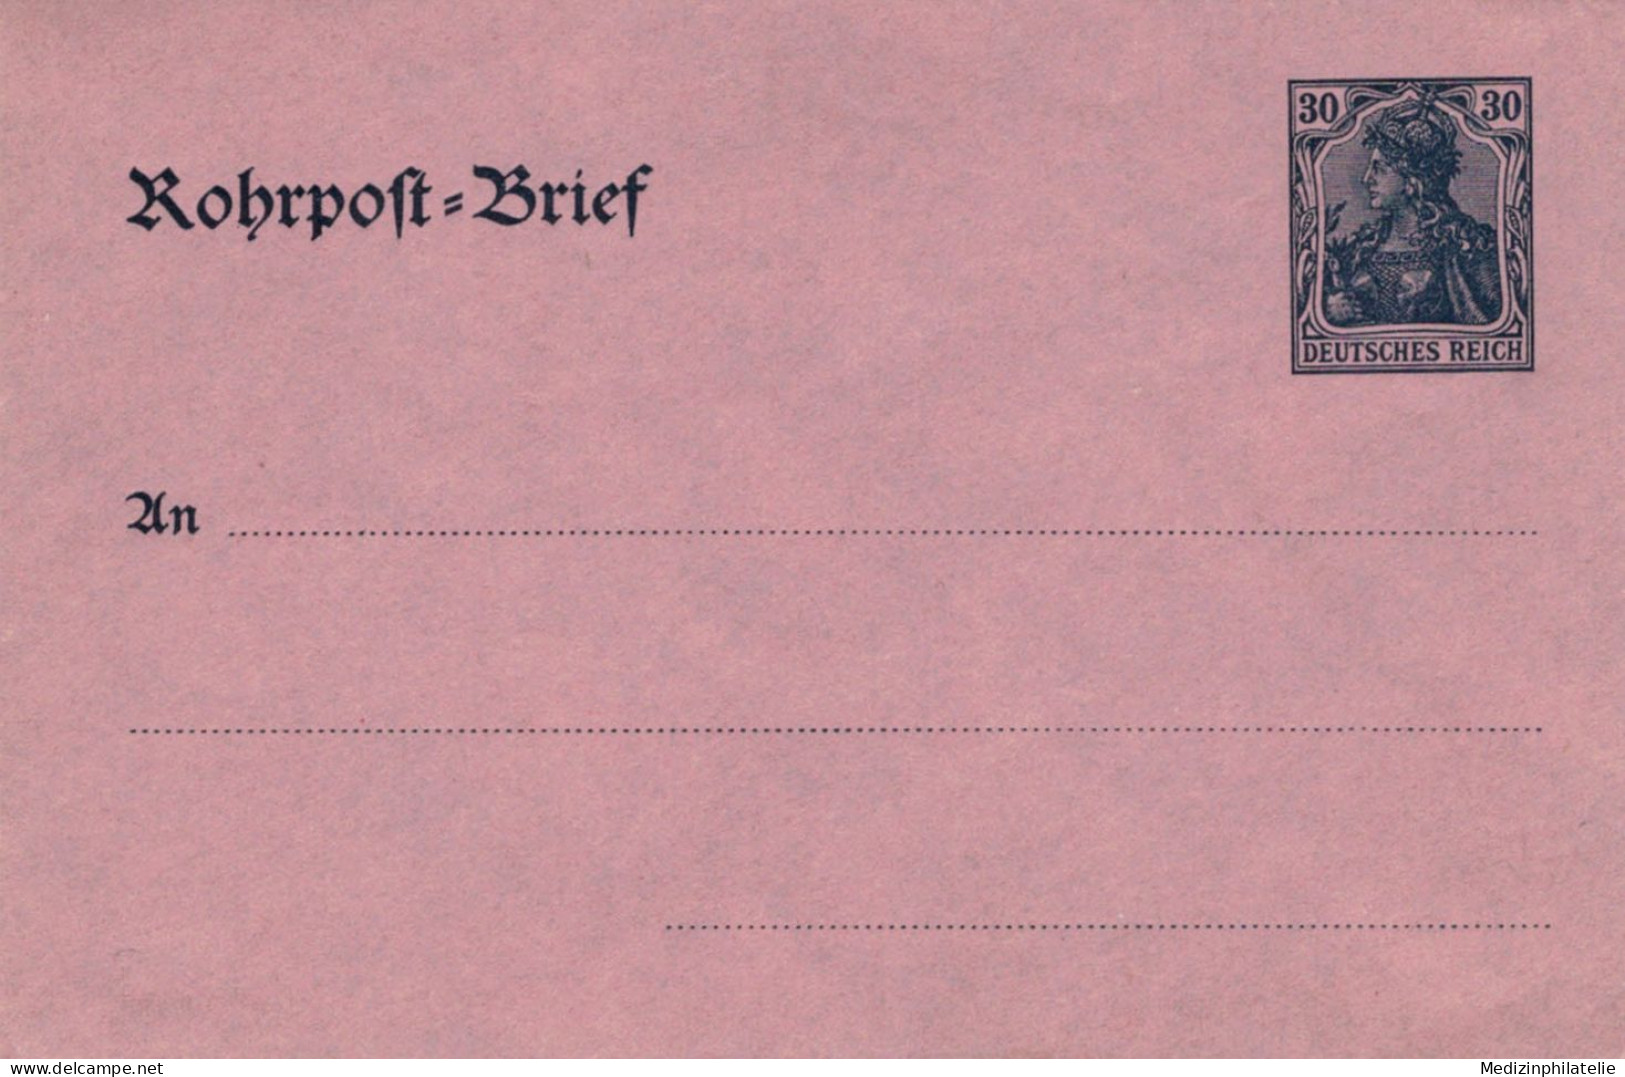 Rohrpost-Brief 30 Pf. Germania Glattes Papier - Ungebraucht - Covers